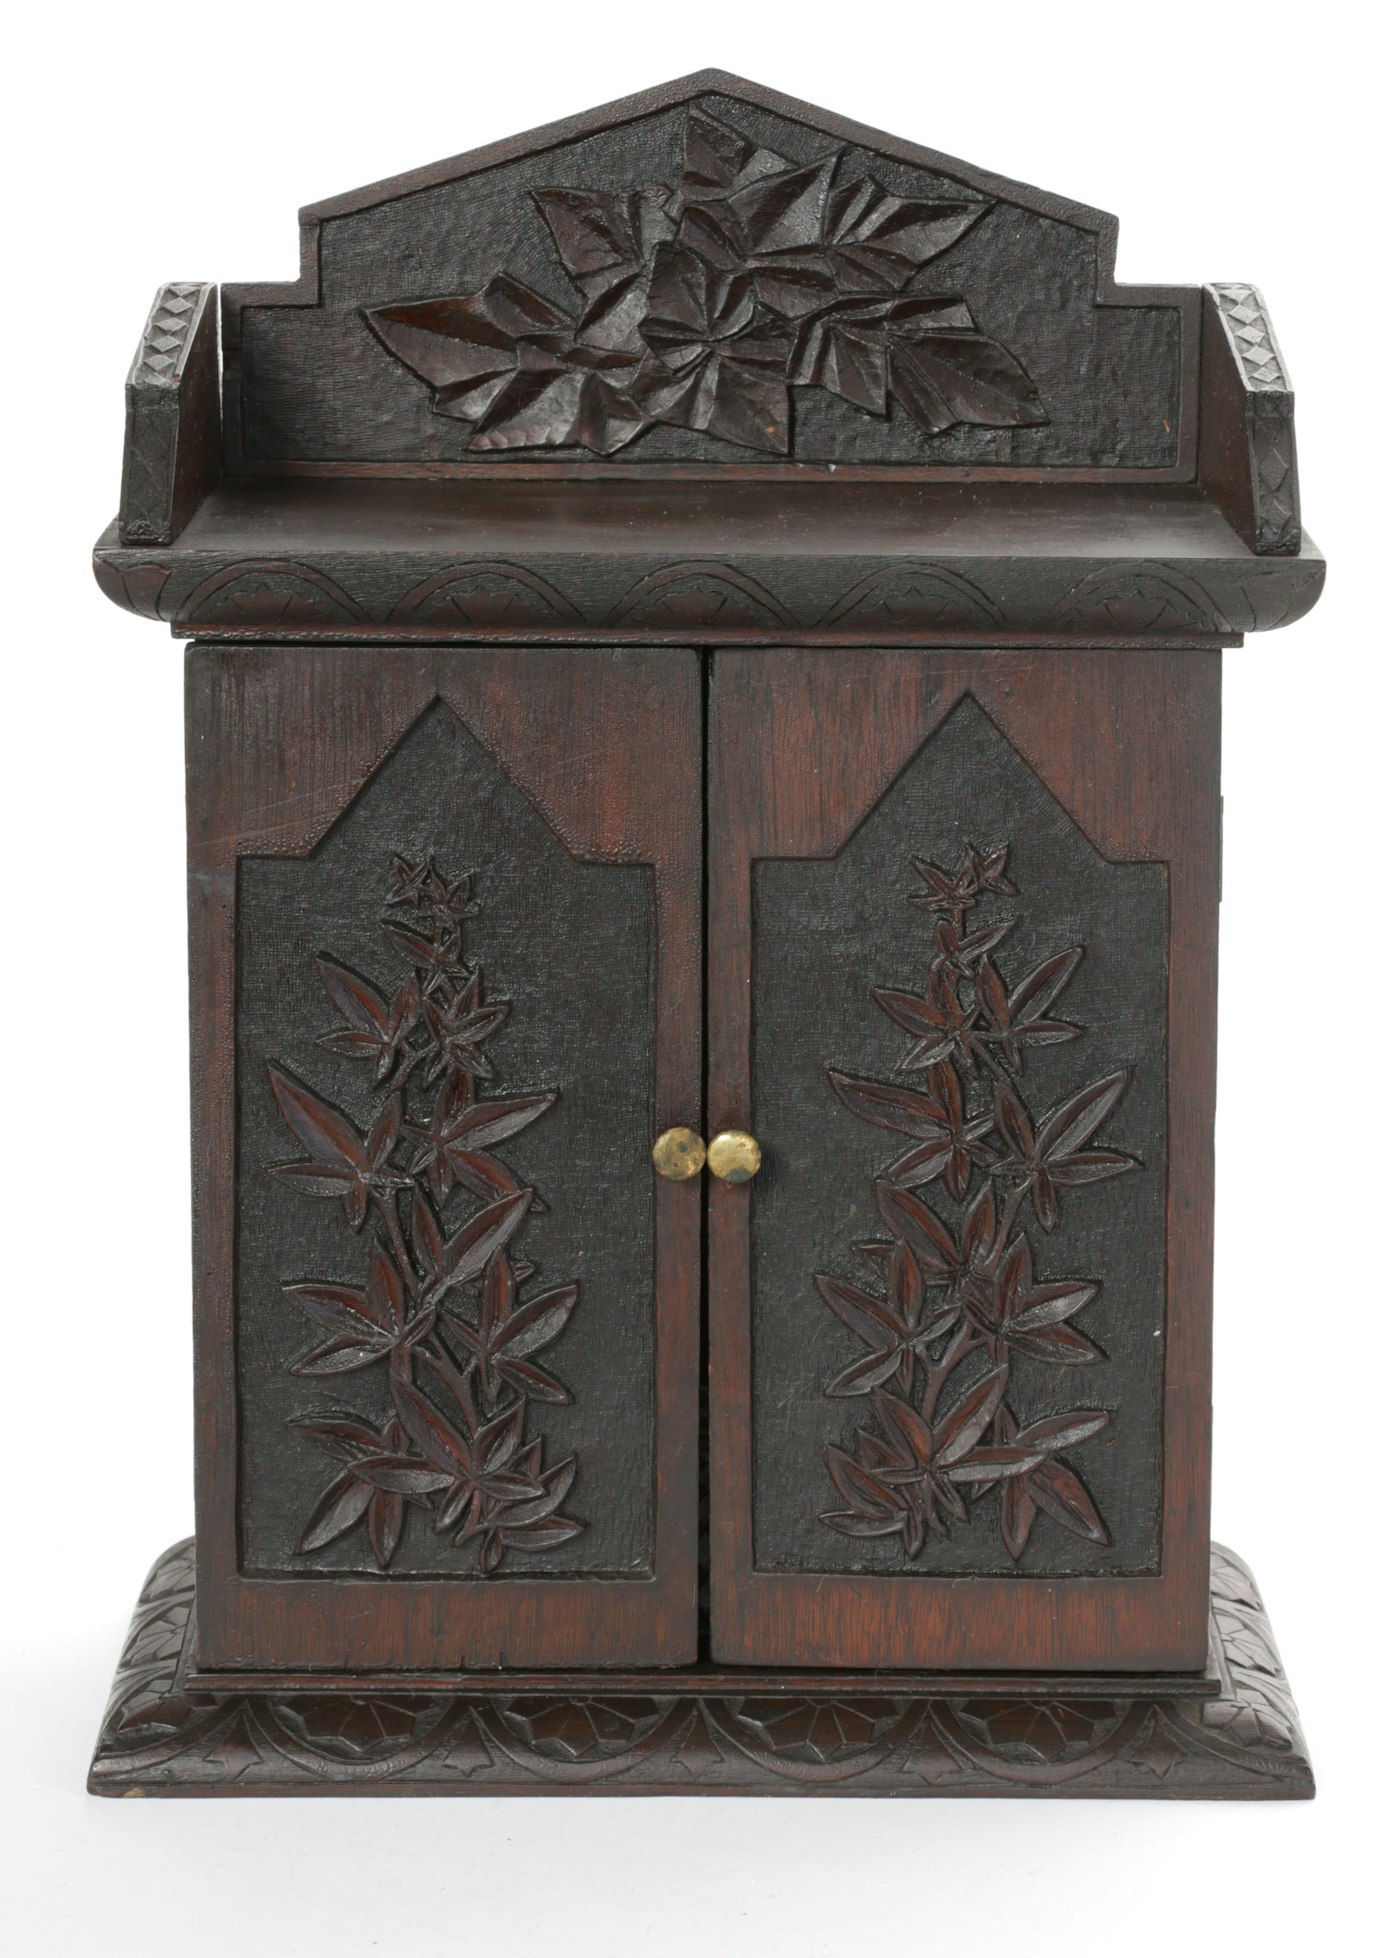 Cincinnati Art Carved Mixed Wood Smoking or Pipe Cabinet 